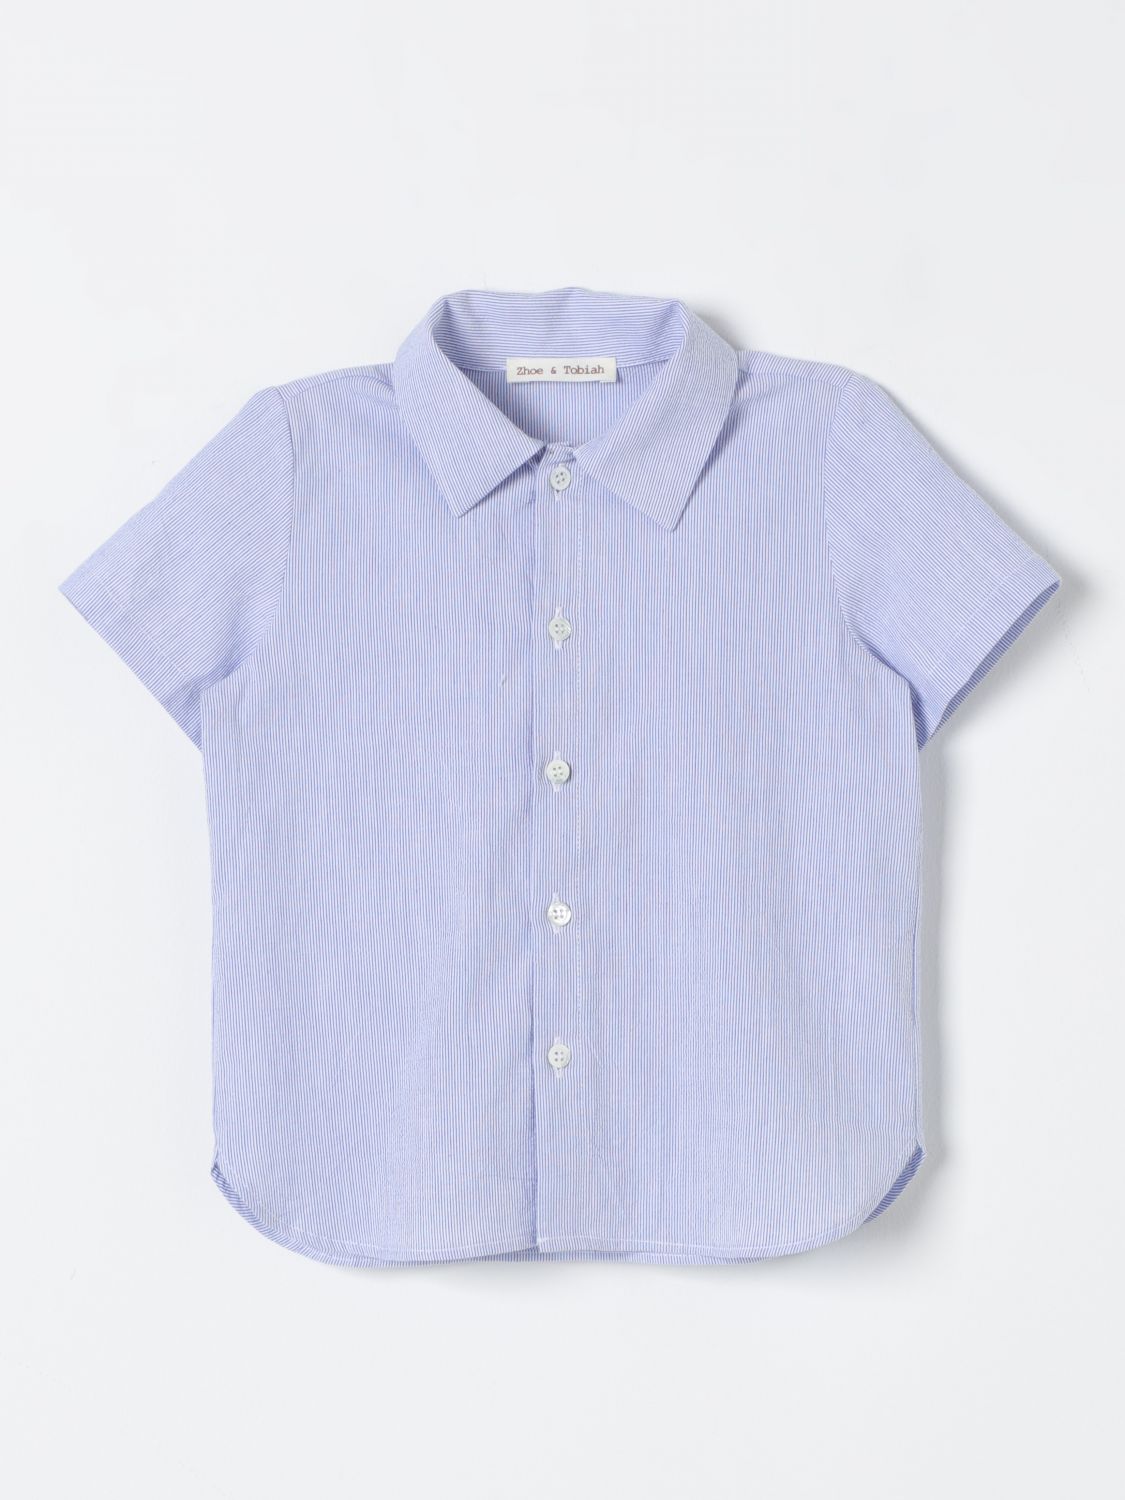 Shop Zhoe & Tobiah Shirt  Kids Color Blue